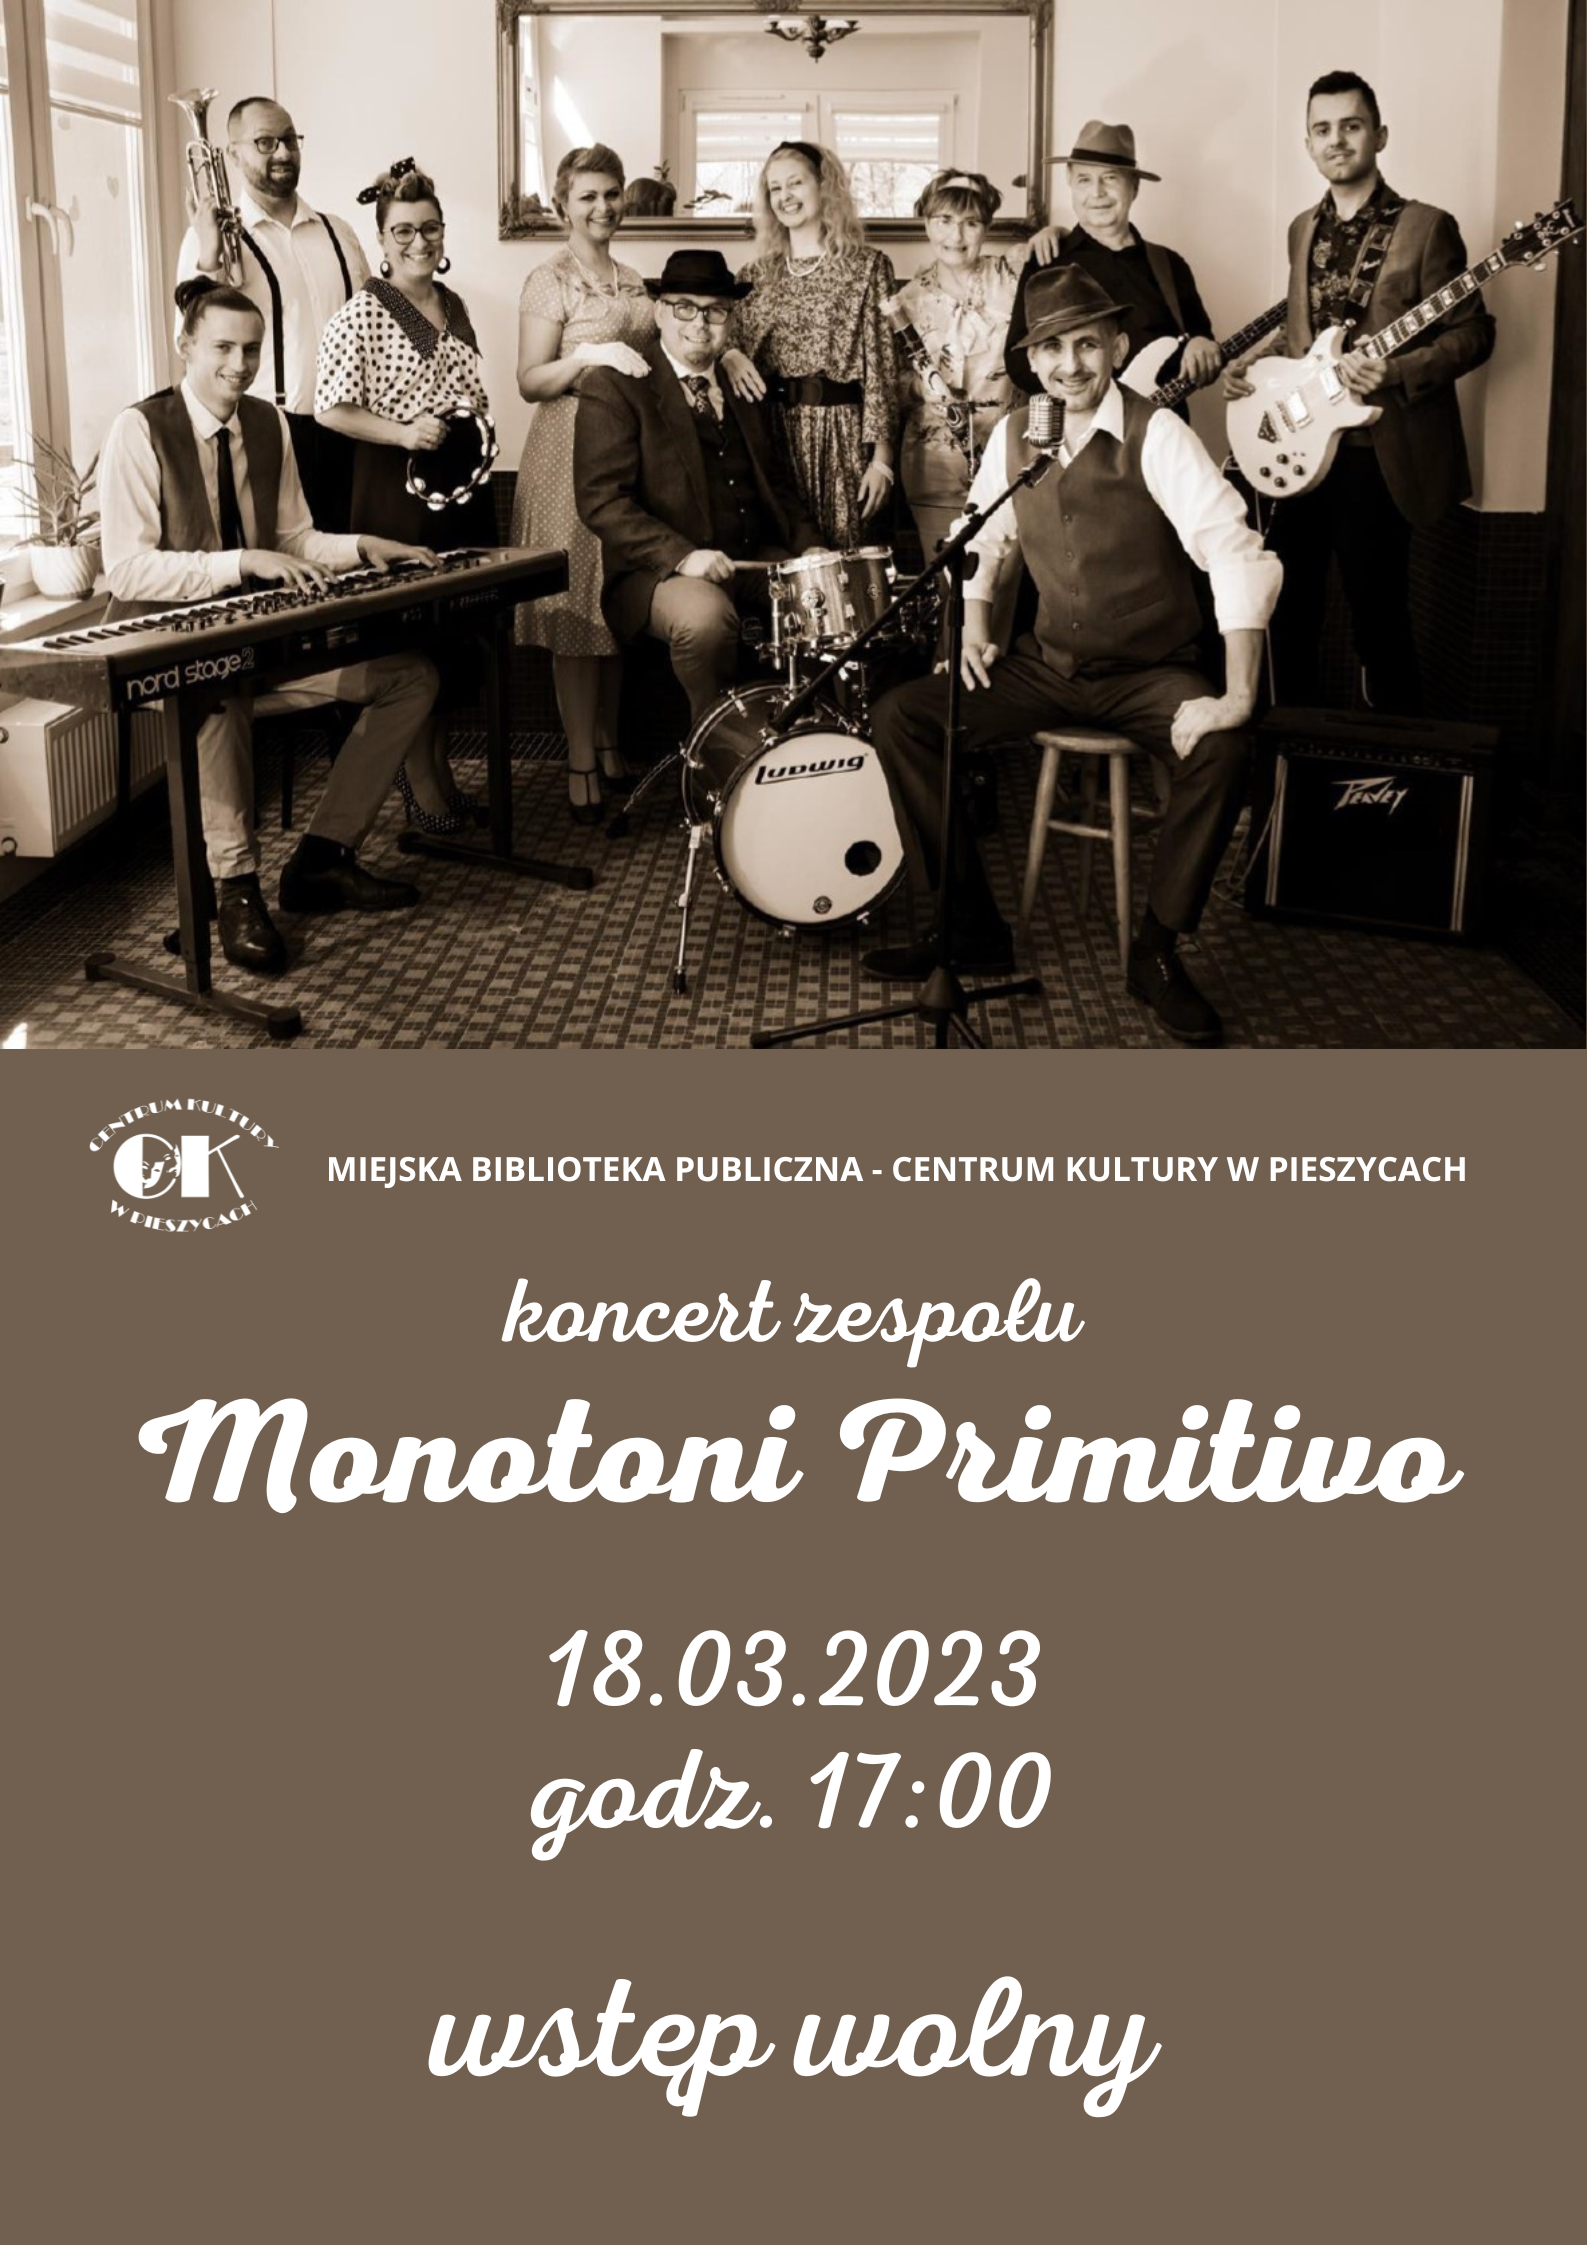 Koncert zespołu Monotoni Primitivo